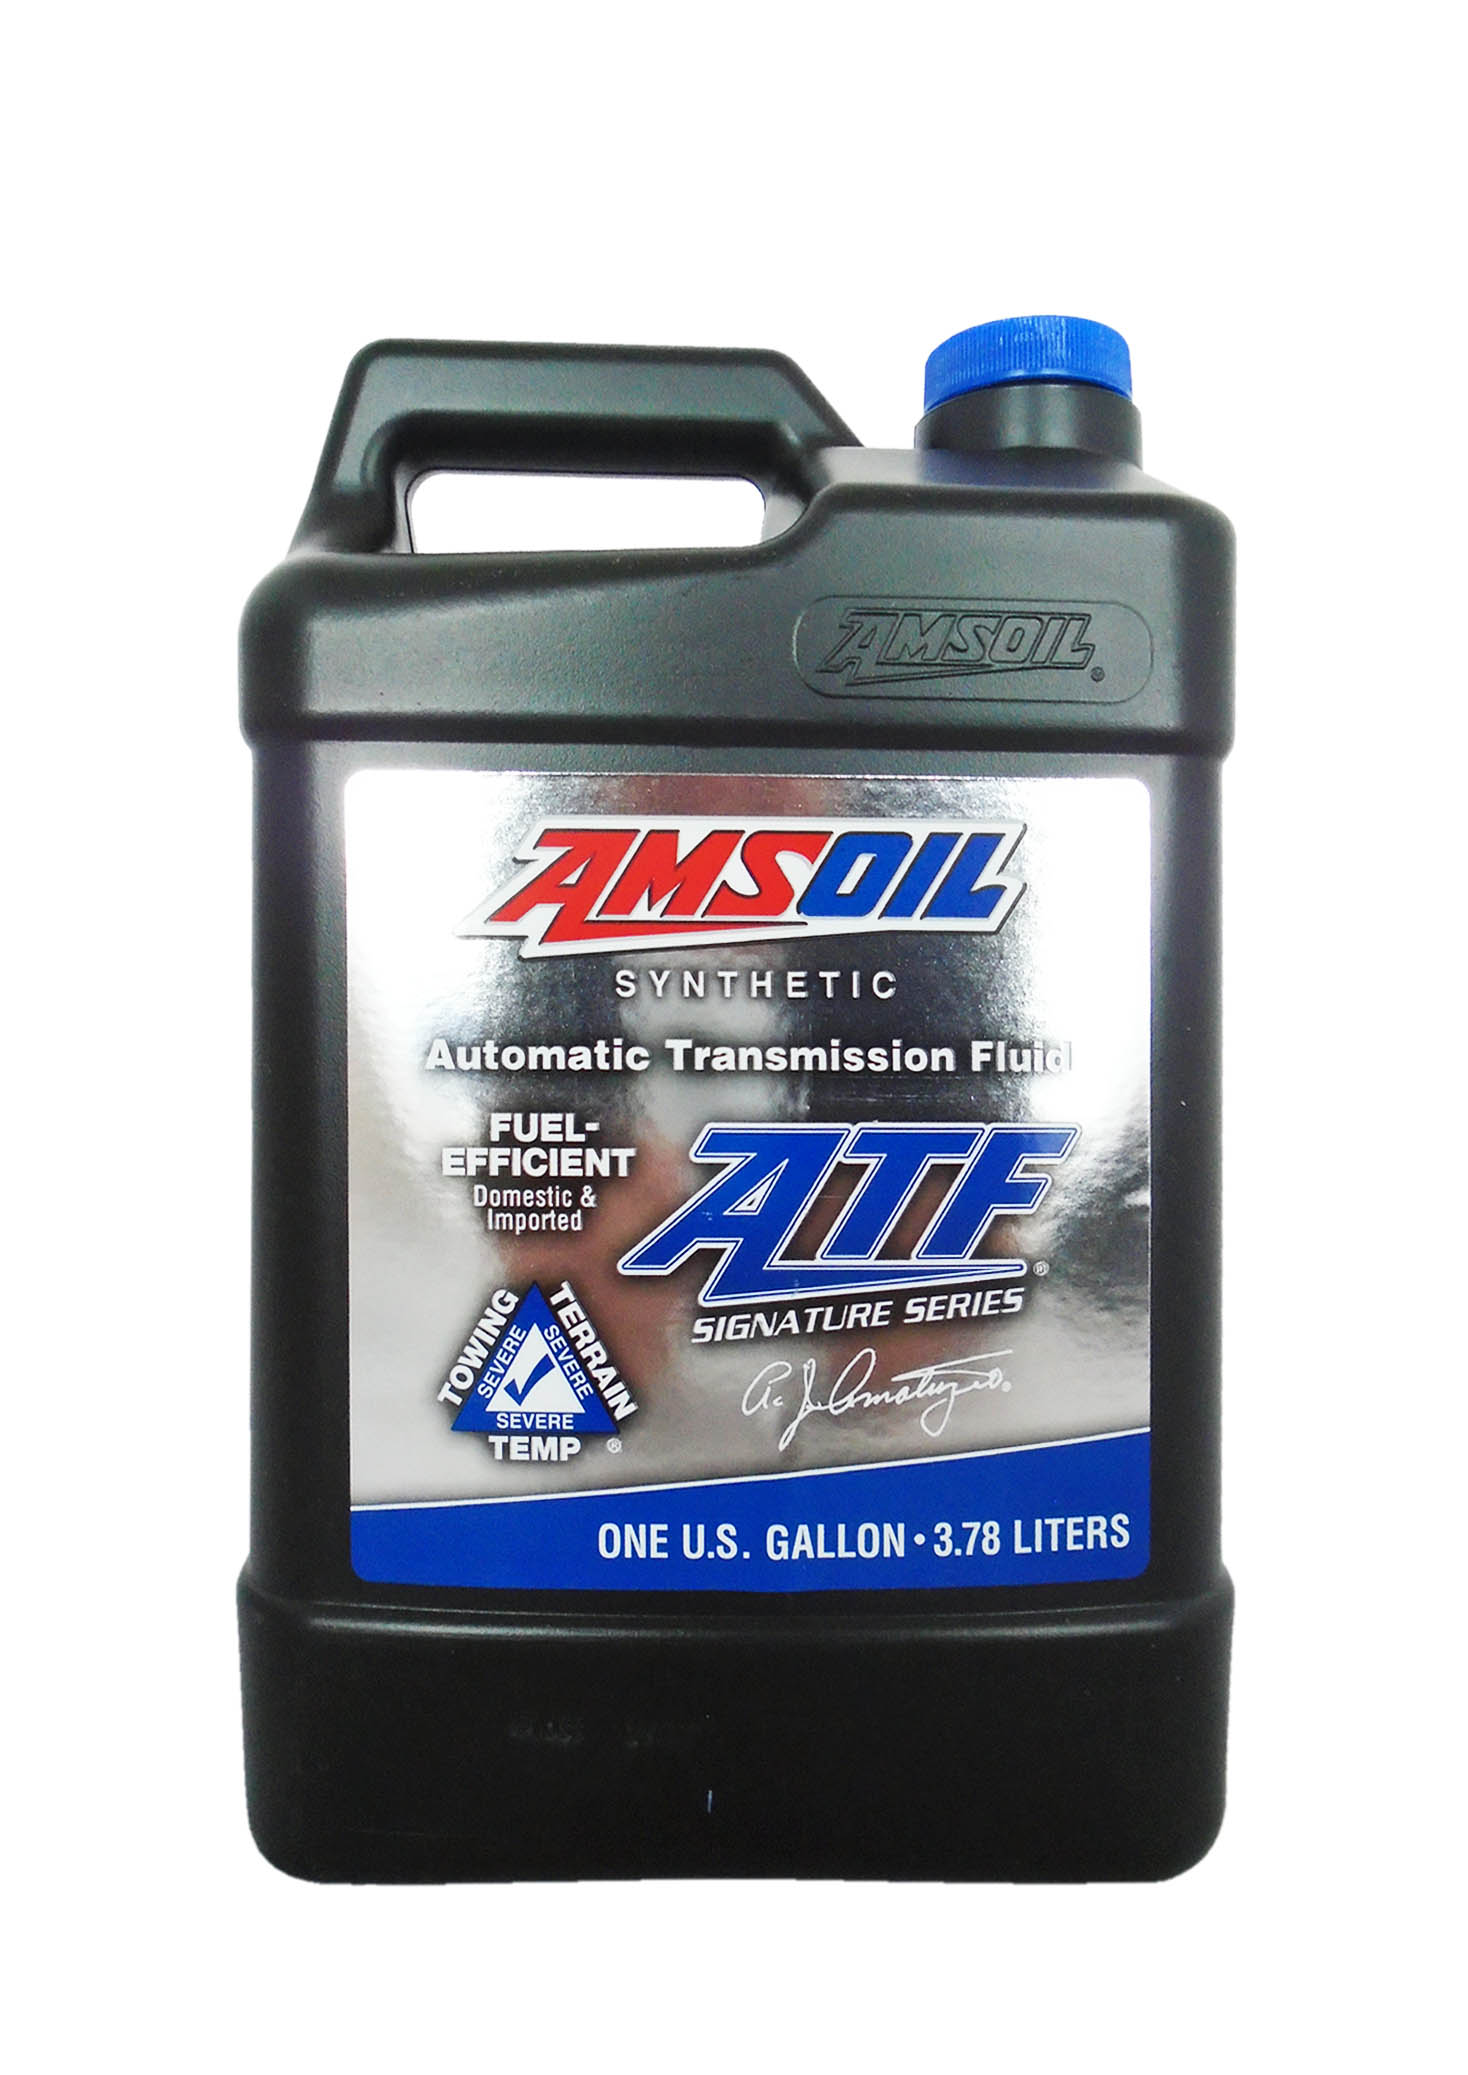 Трансмиссионное масло amsoil signature series fuel-efficient synthetic automatic transmission fluid (atf) (3,78л) AMSOIL ATL1G